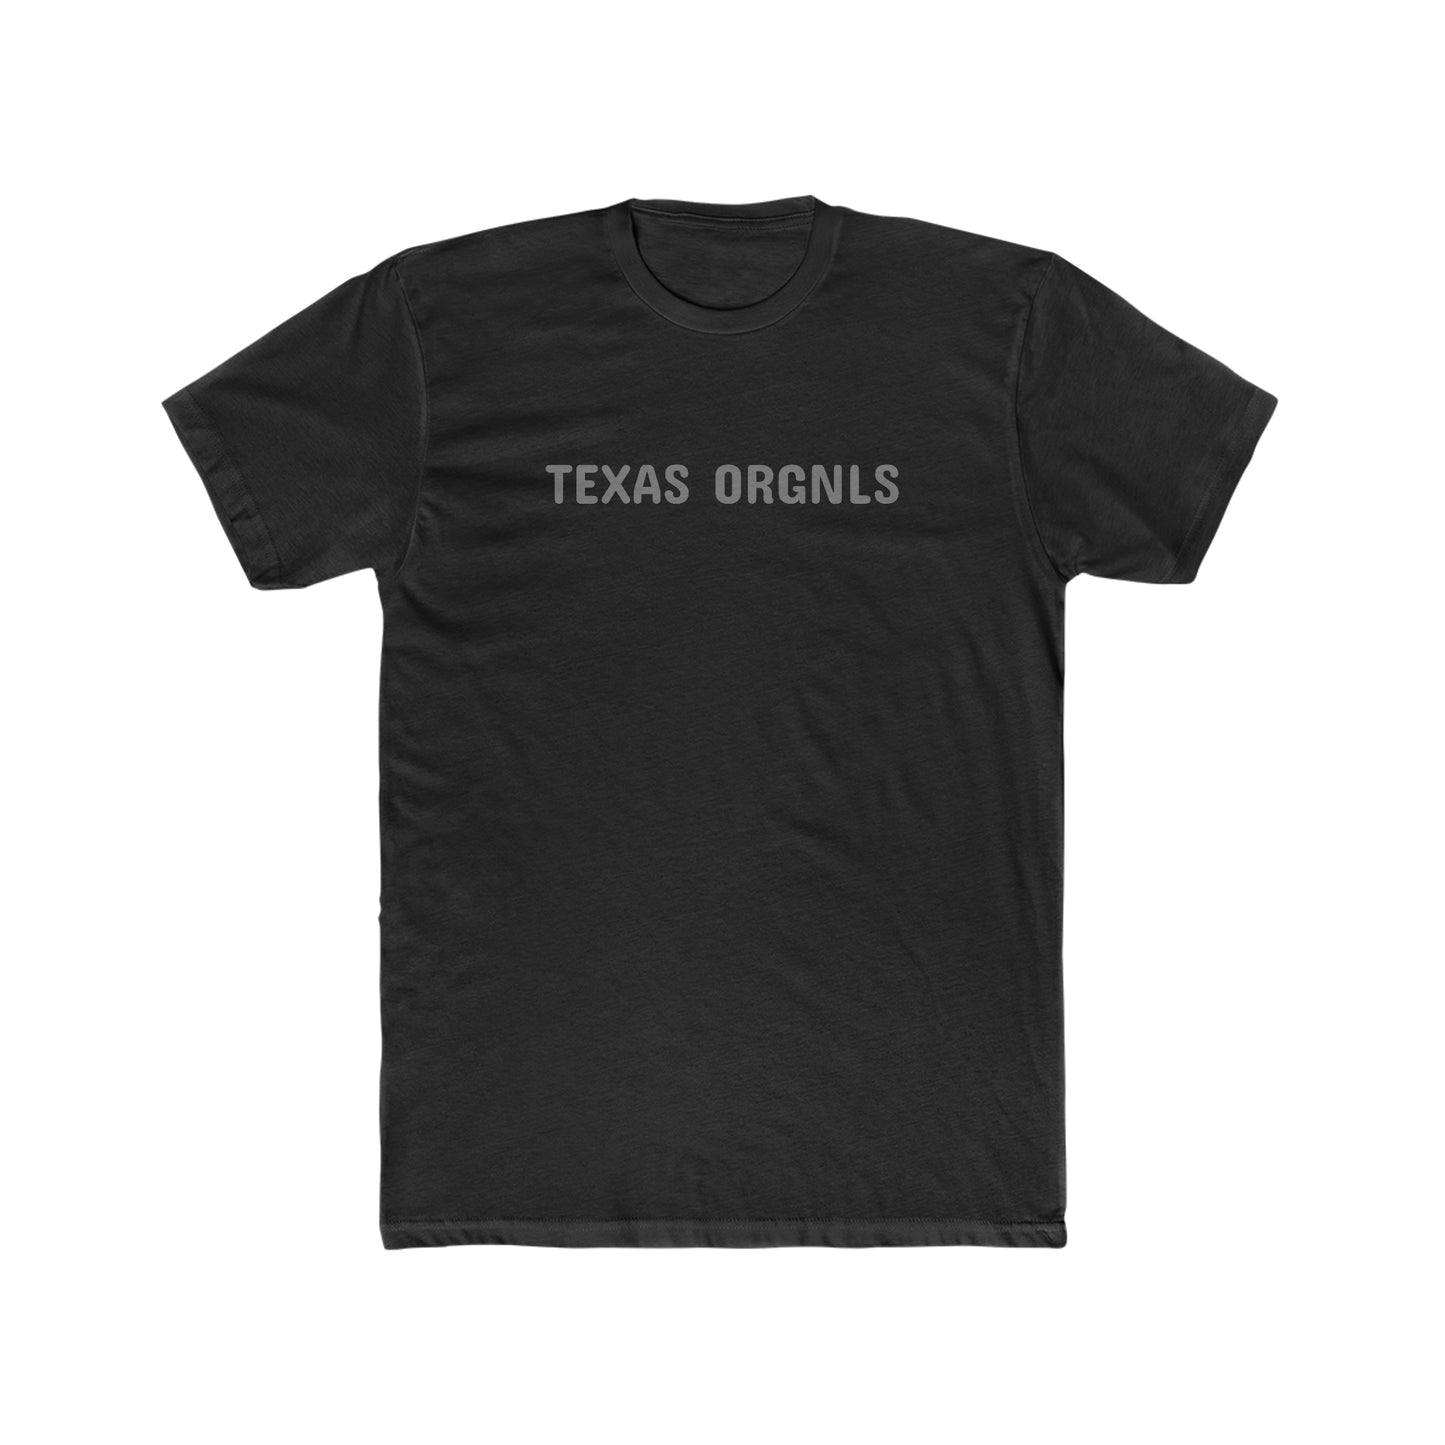 Texas Orgnls “Grey Seal” Unisex Tee Special Edition